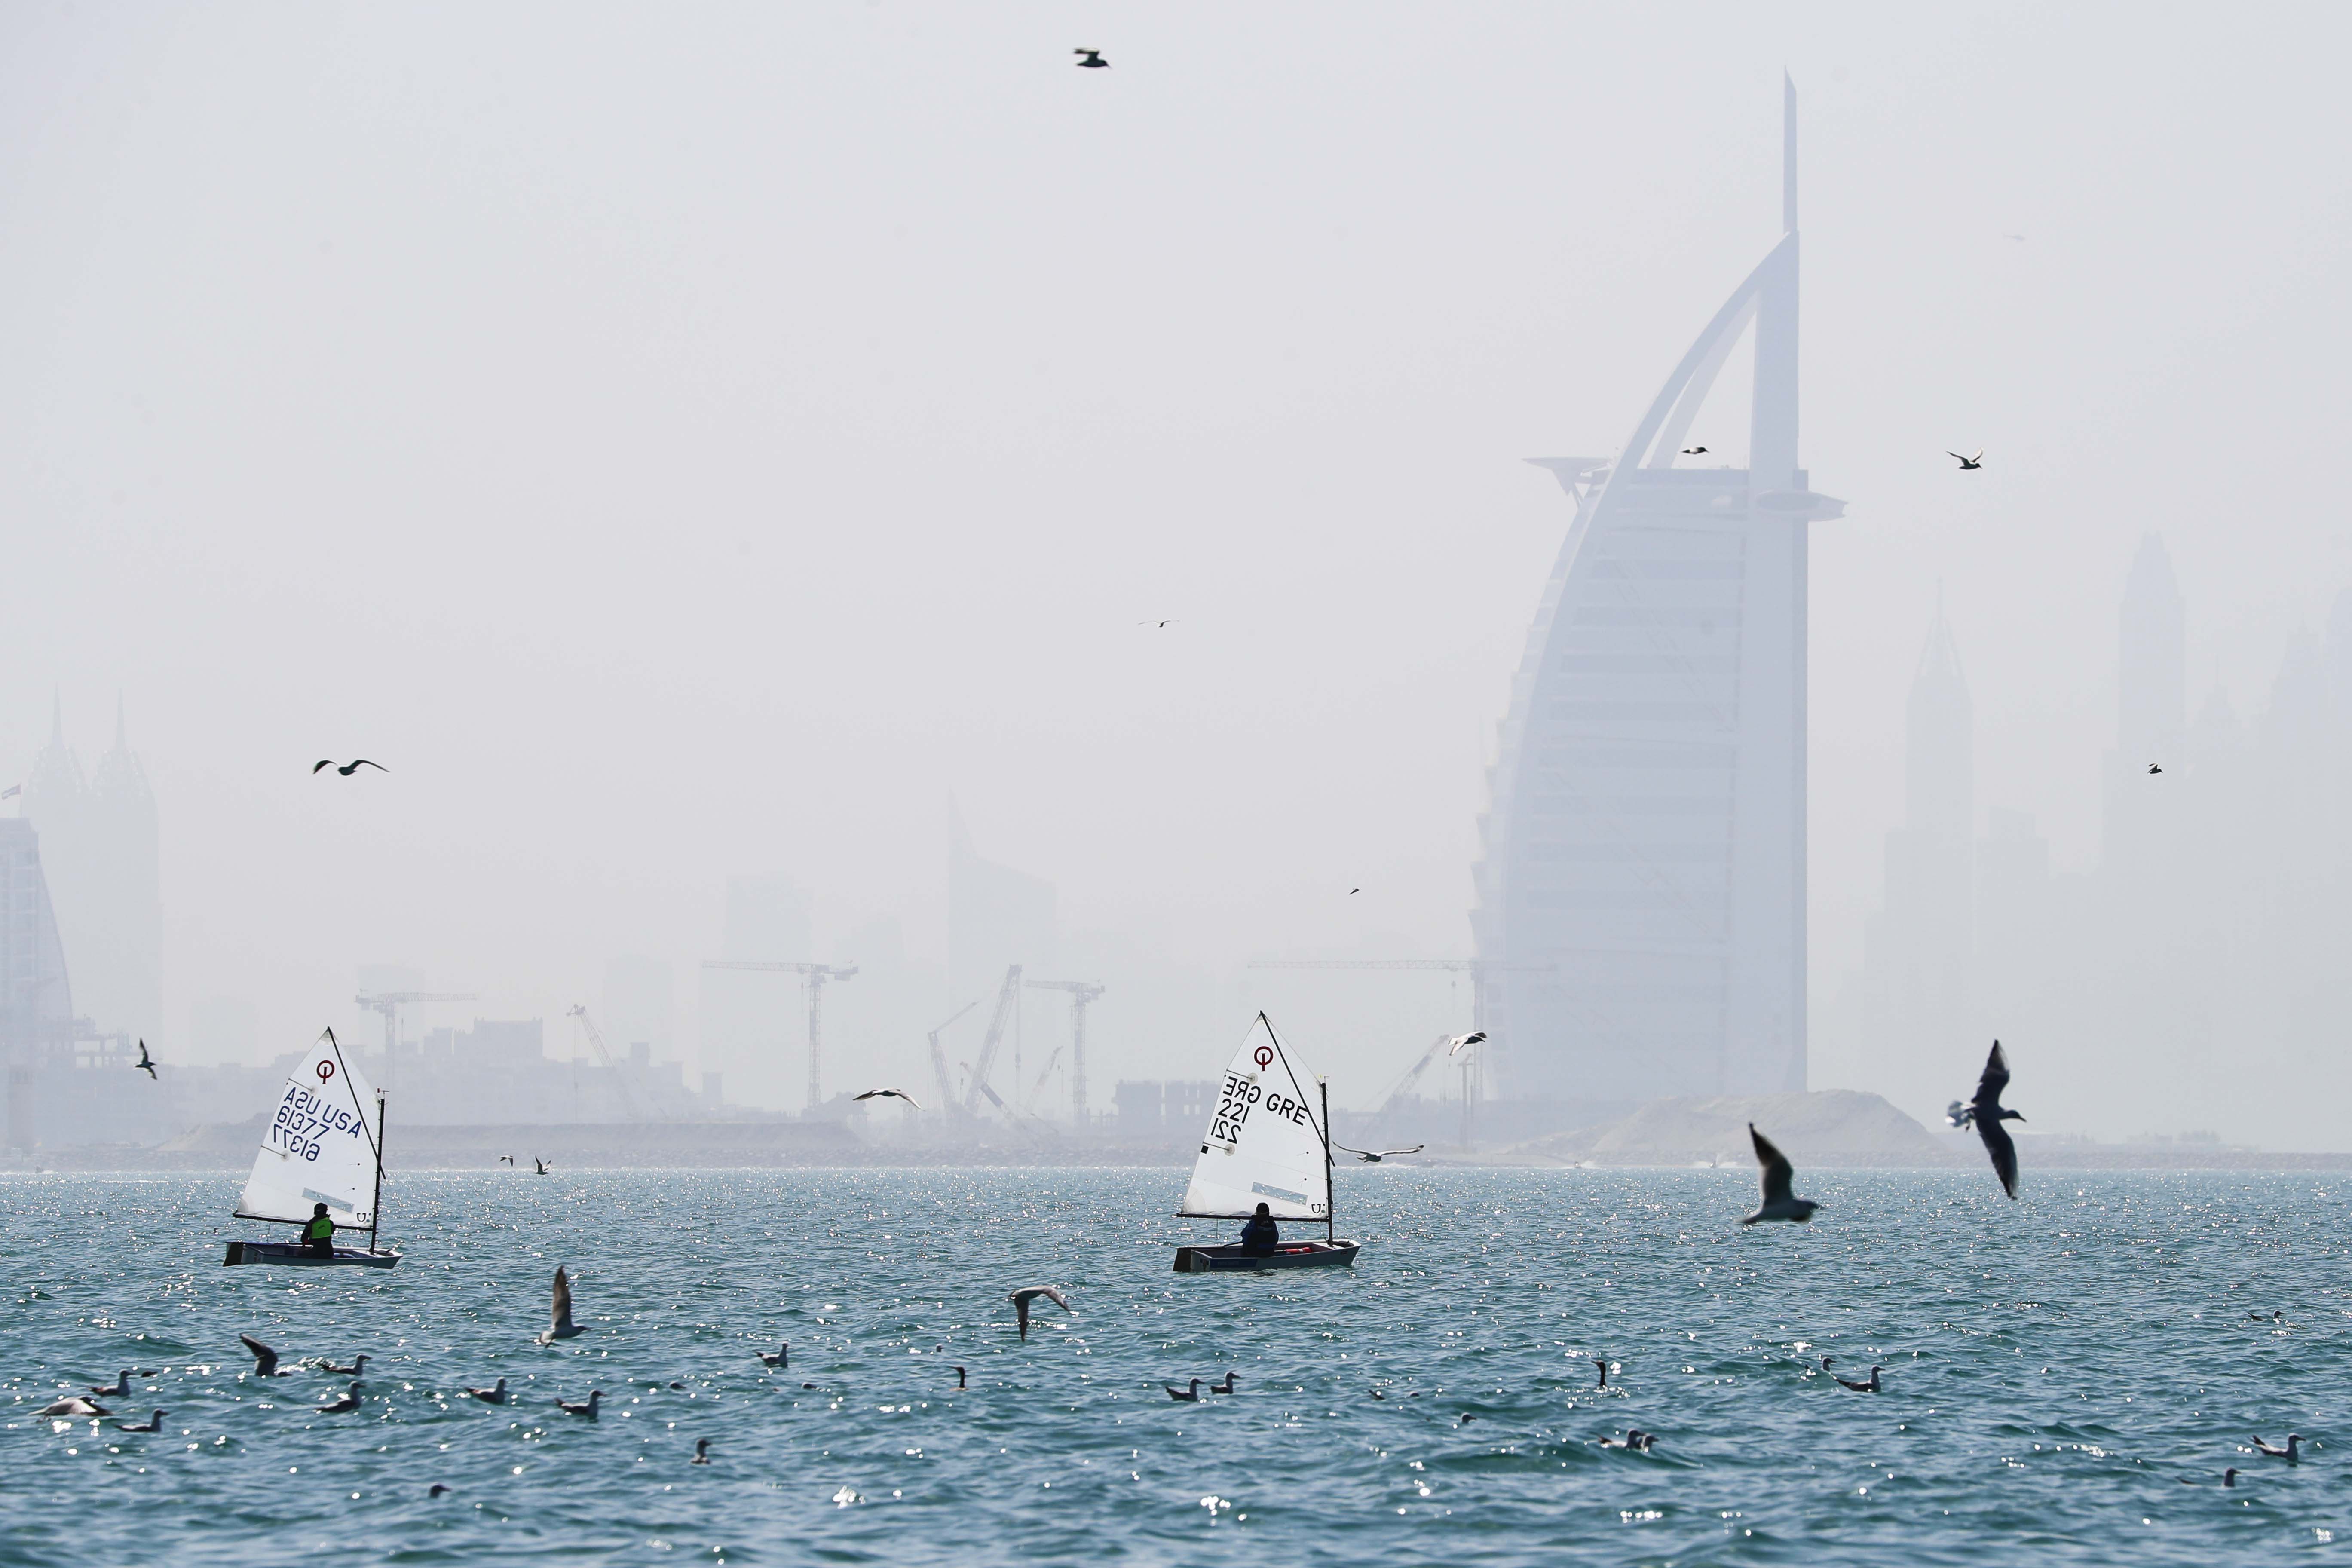 Dubai Modern Sailing Championships on the beaches of Dubai this Sunday